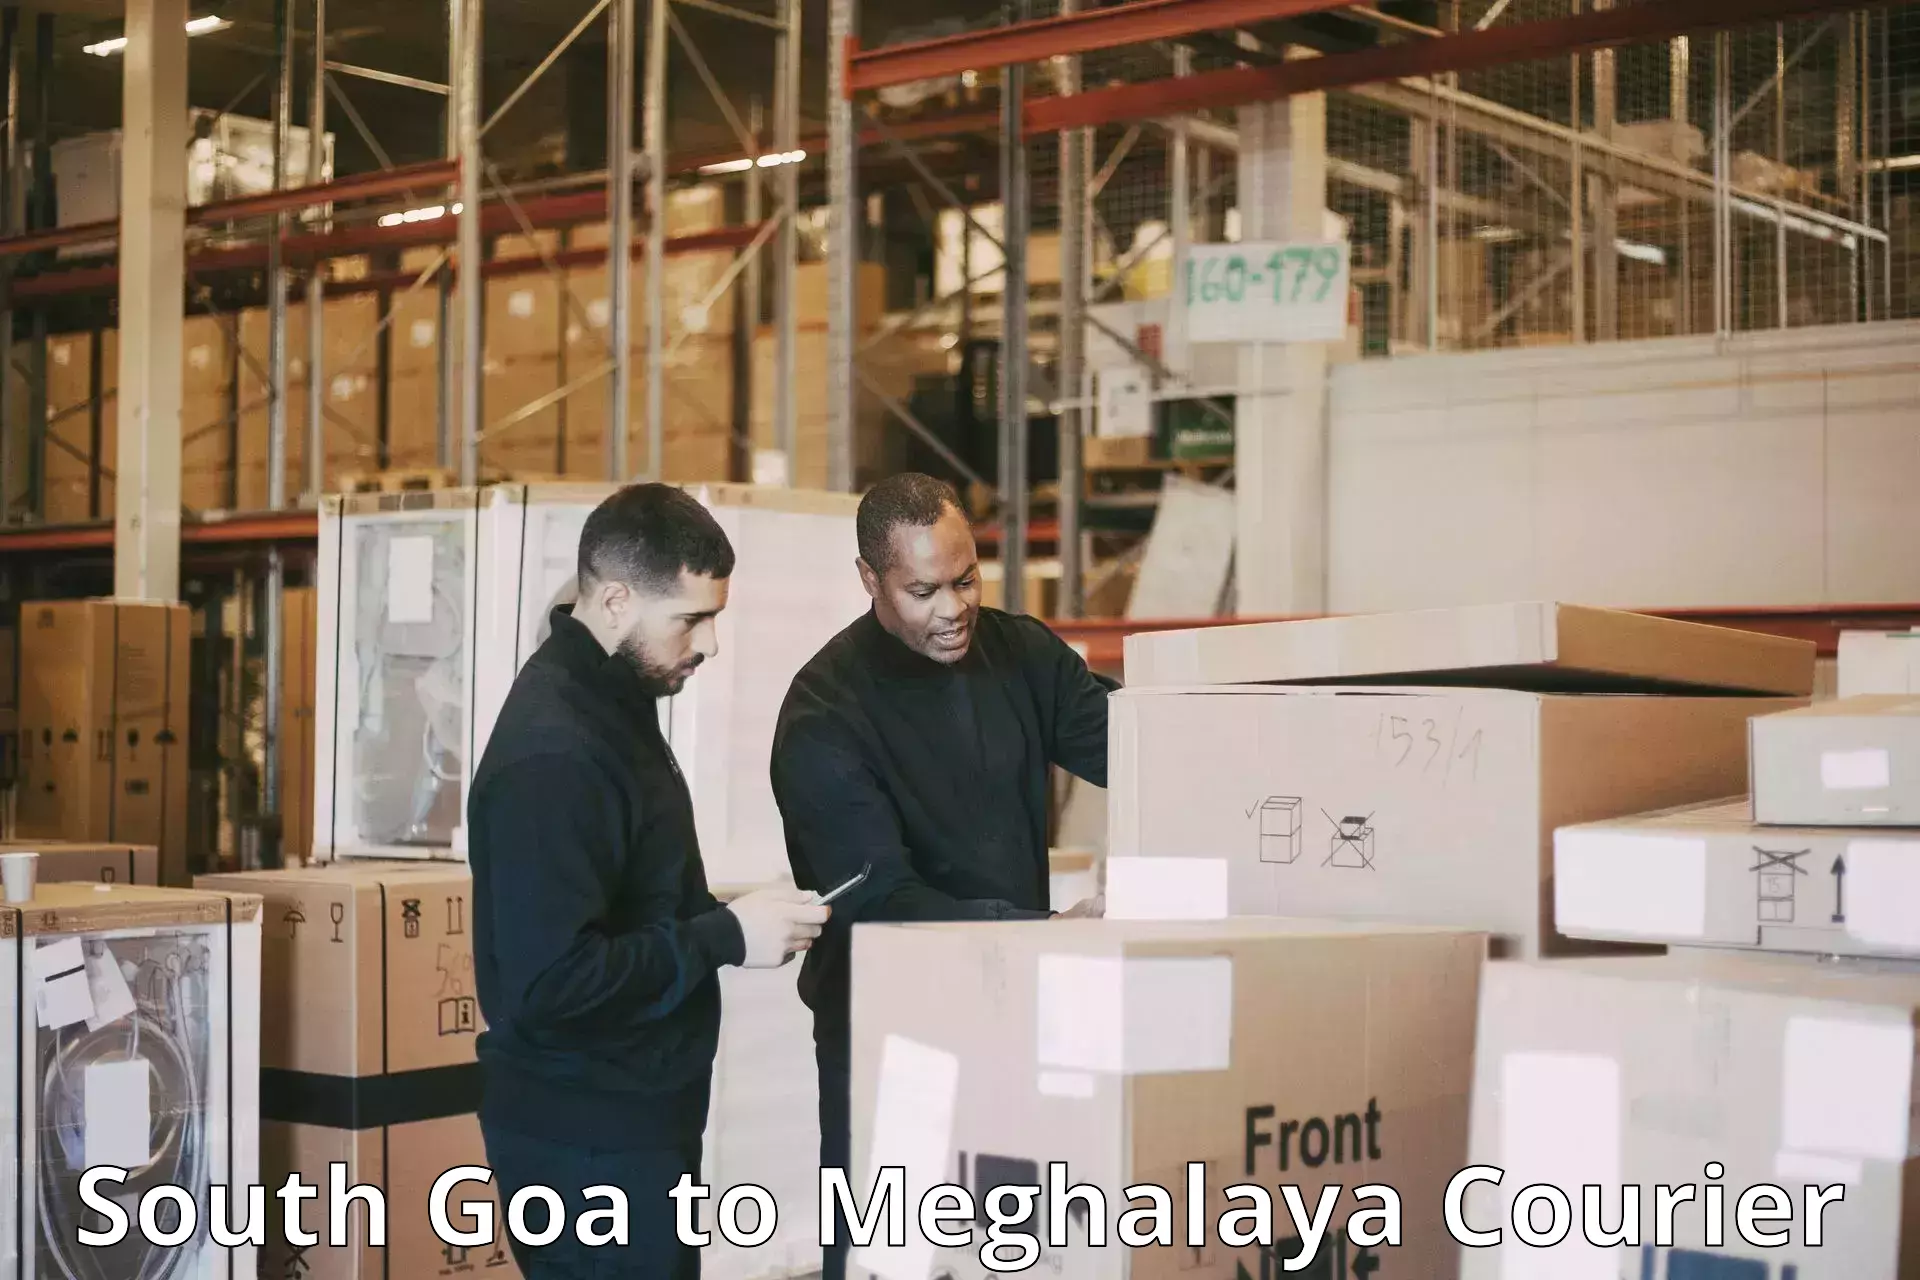 Professional courier handling South Goa to Meghalaya